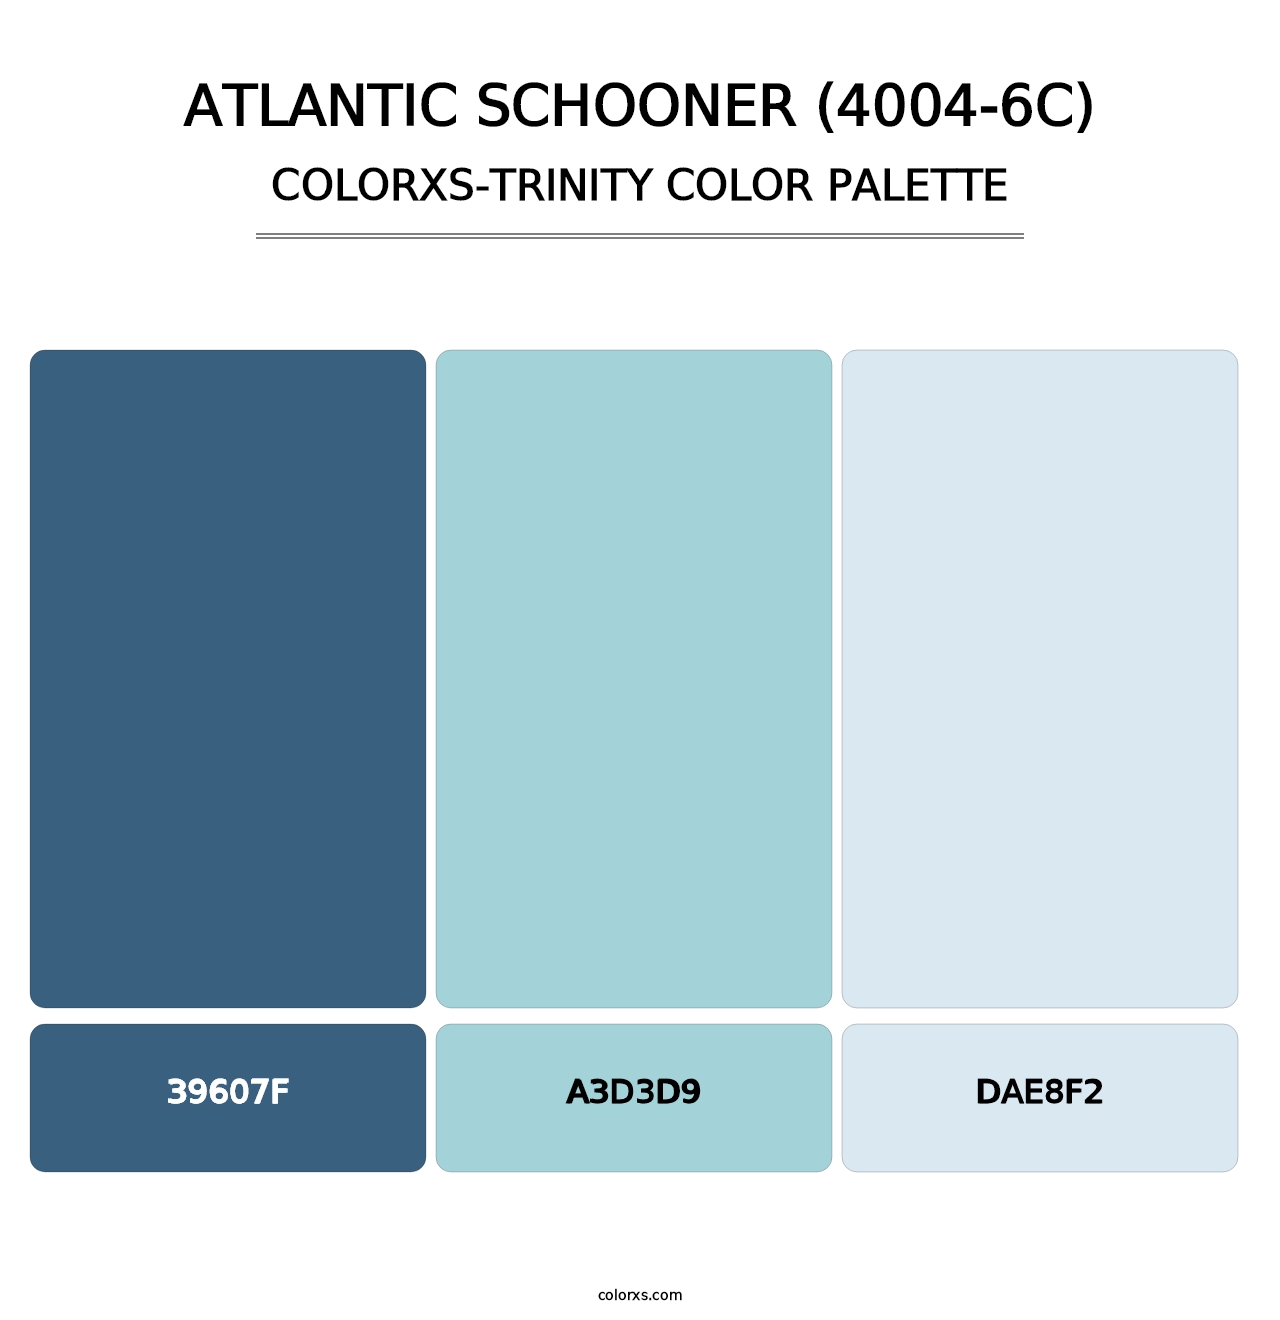 Atlantic Schooner (4004-6C) - Colorxs Trinity Palette